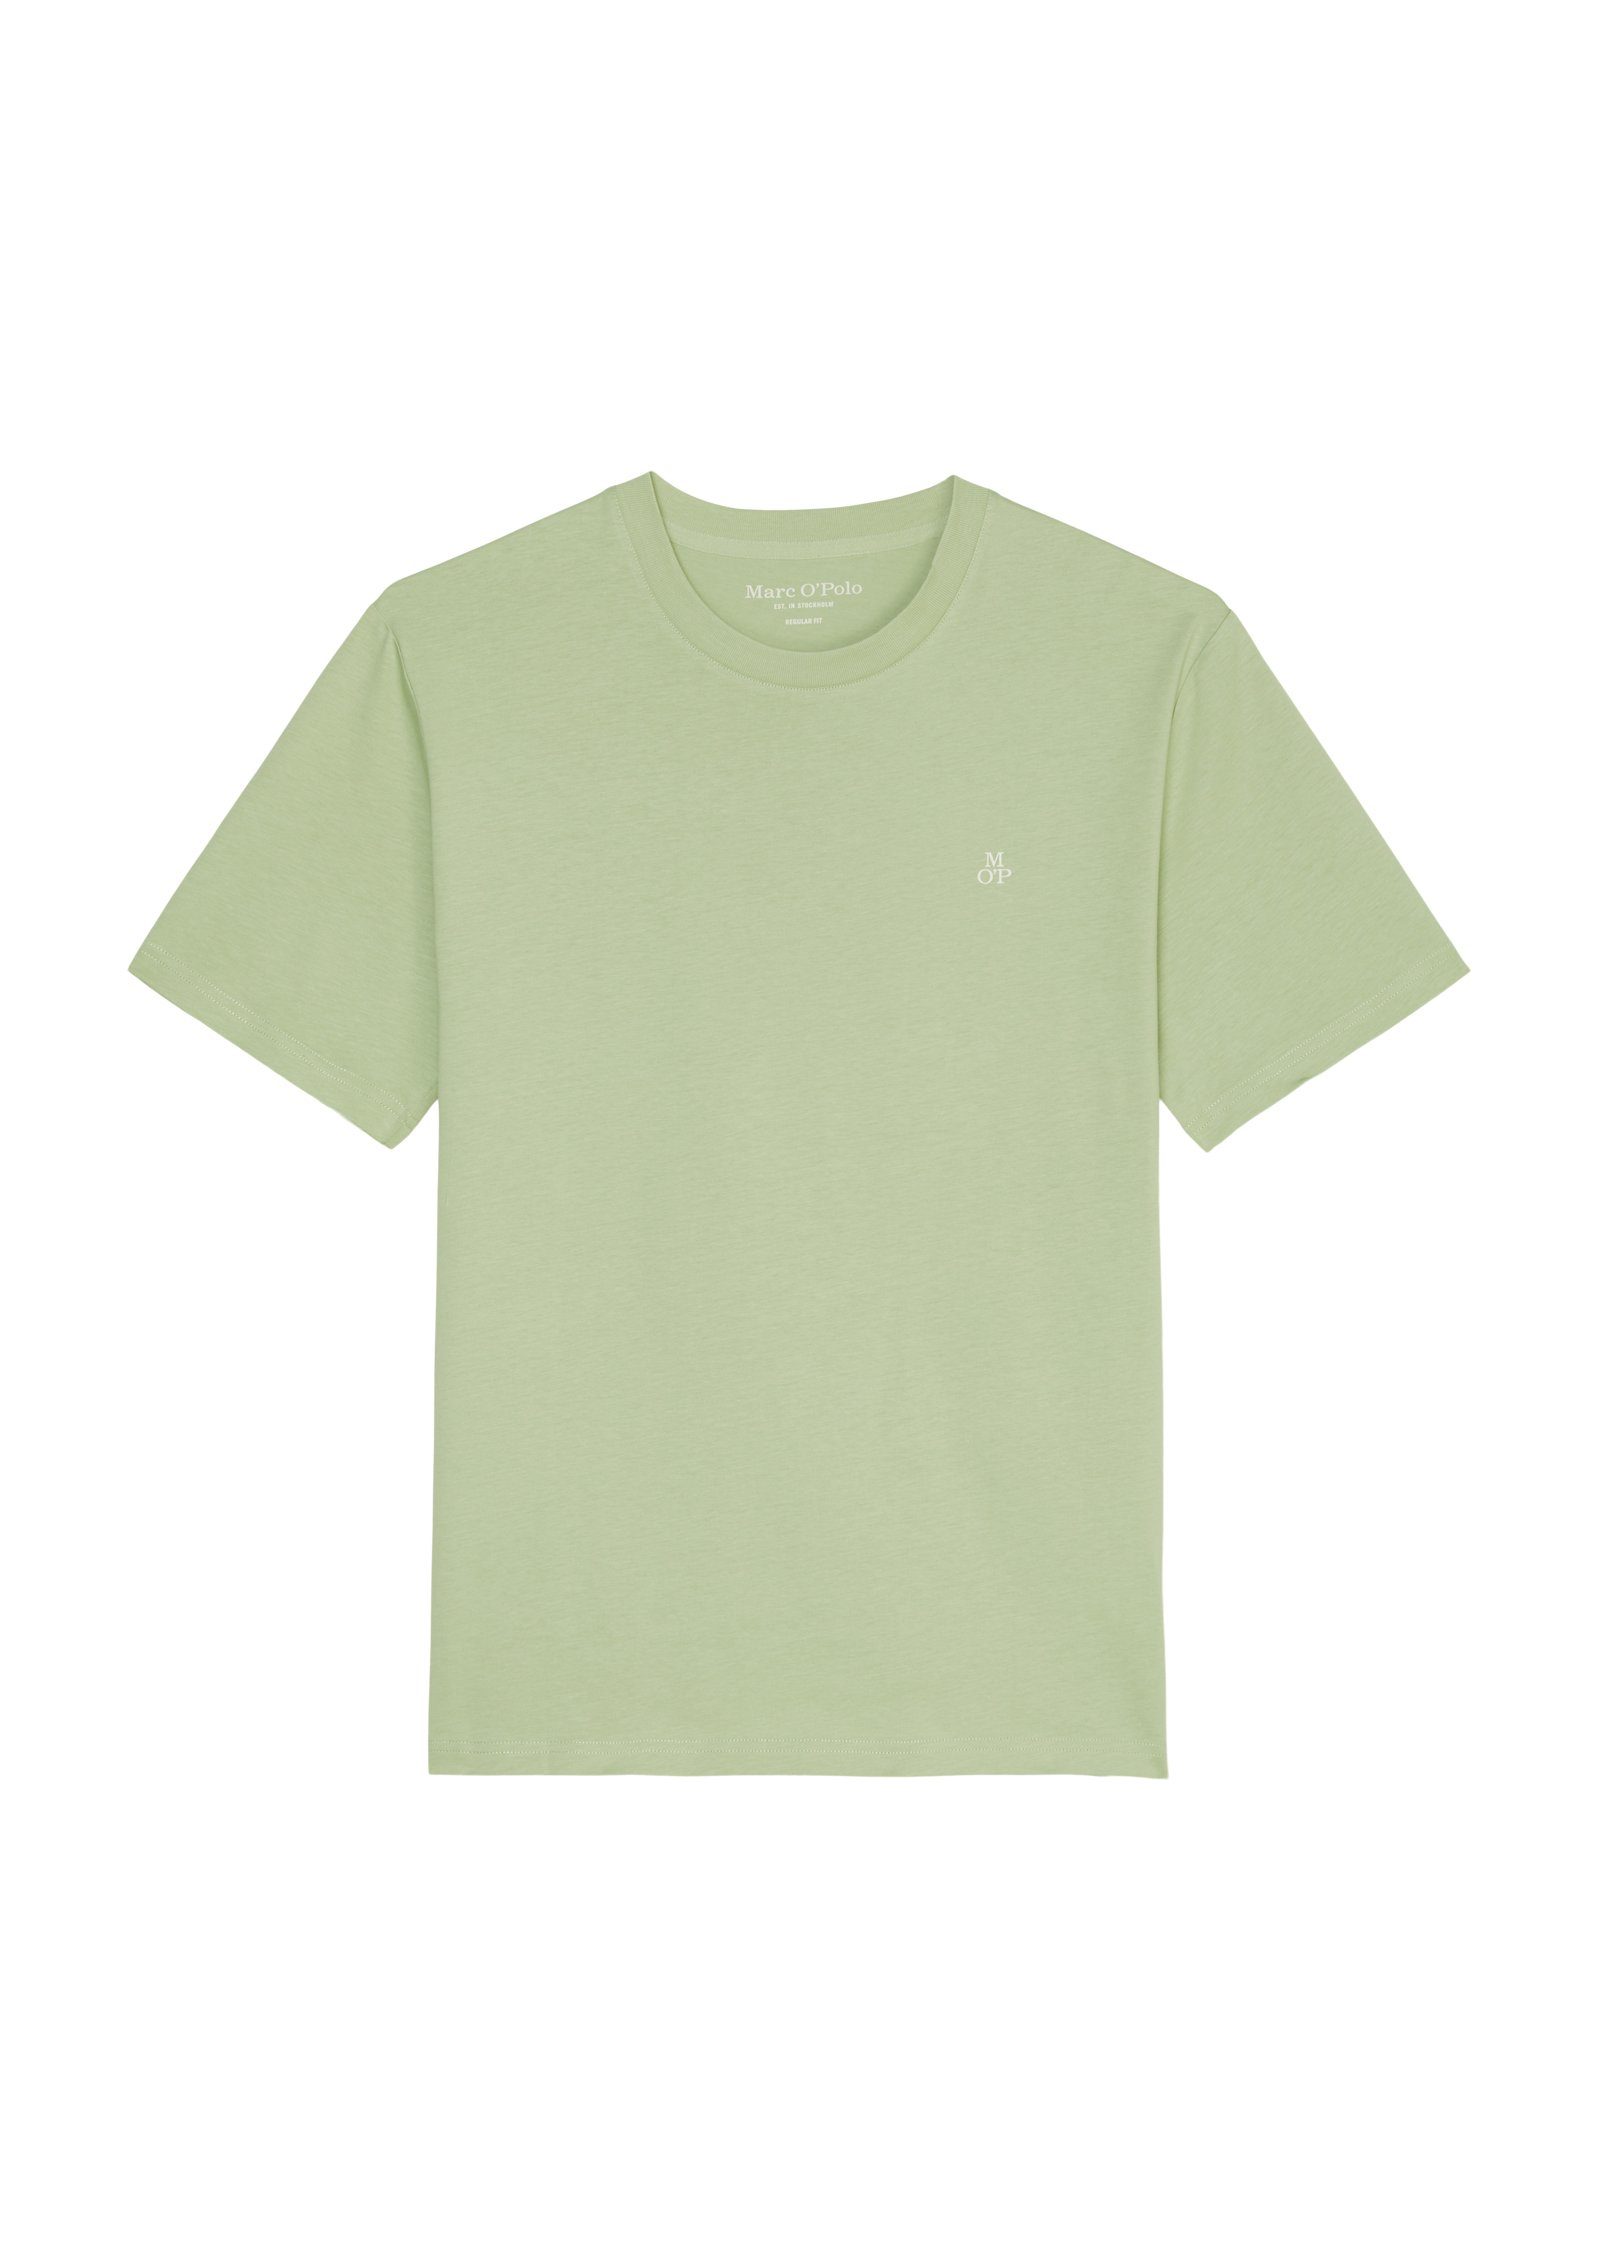 T-shirt, collar short rainee logo ribbed O'Polo T-Shirt Marc sleeve, print,